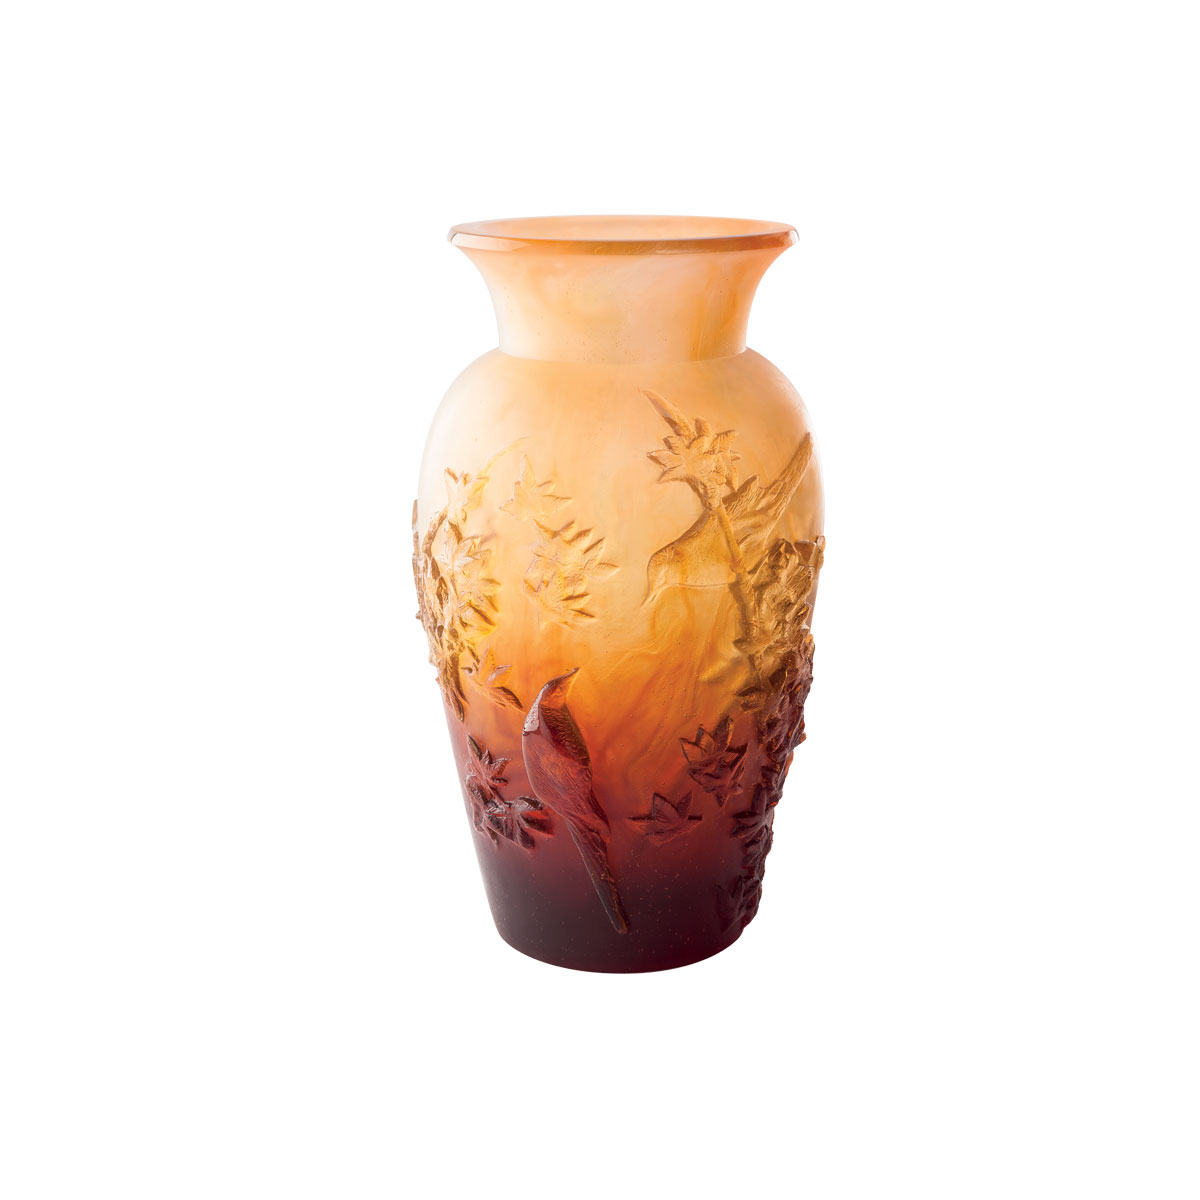 Daum Autumn Vase by Shogo Kariyazaki, Limited Edition in Amber